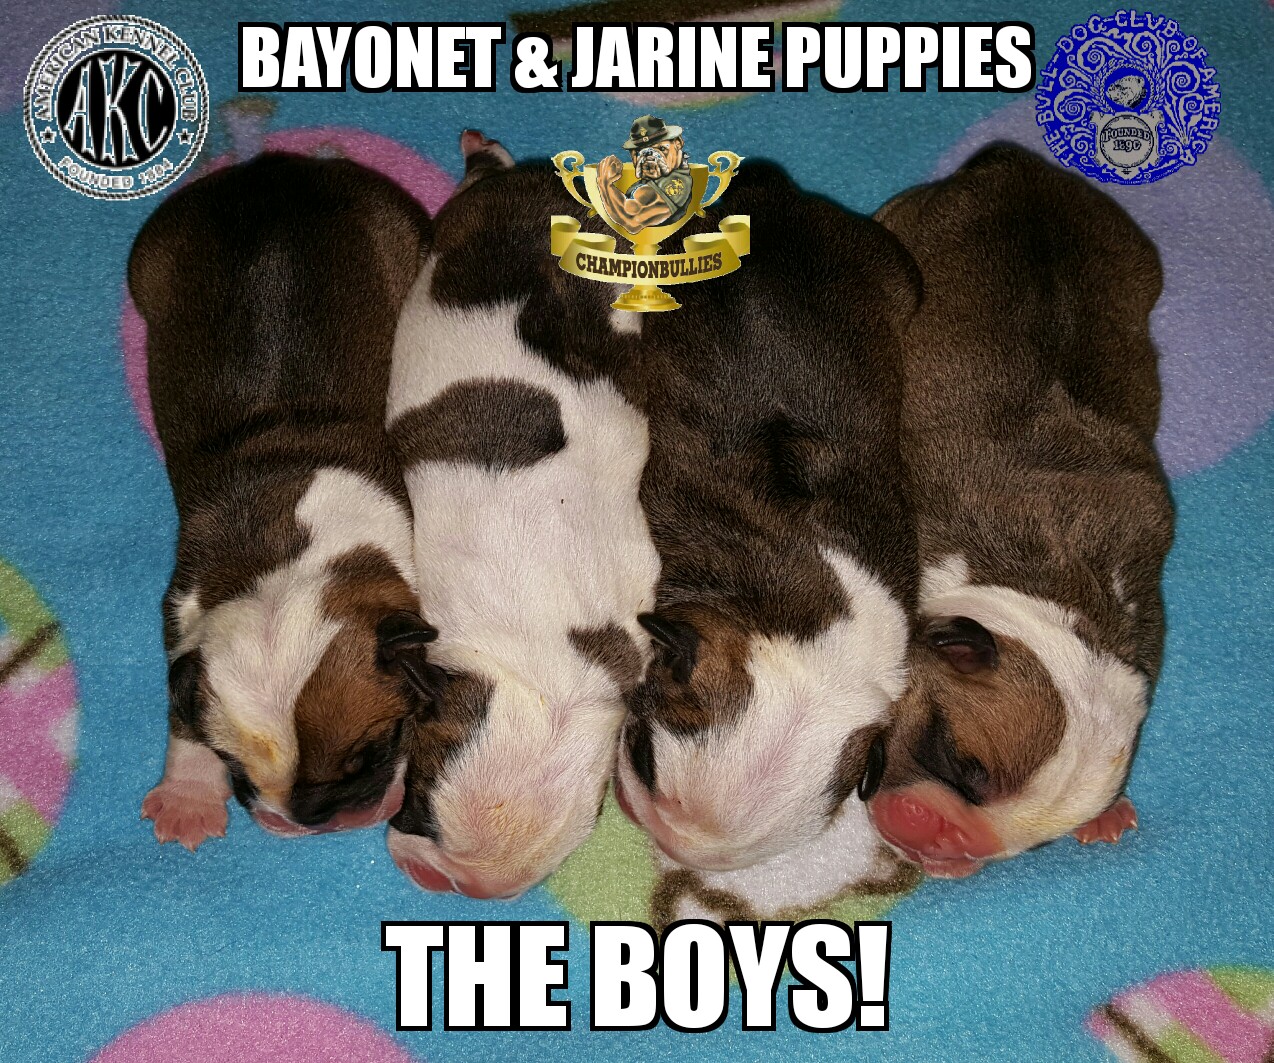 Bayonet & Jarine Puppies